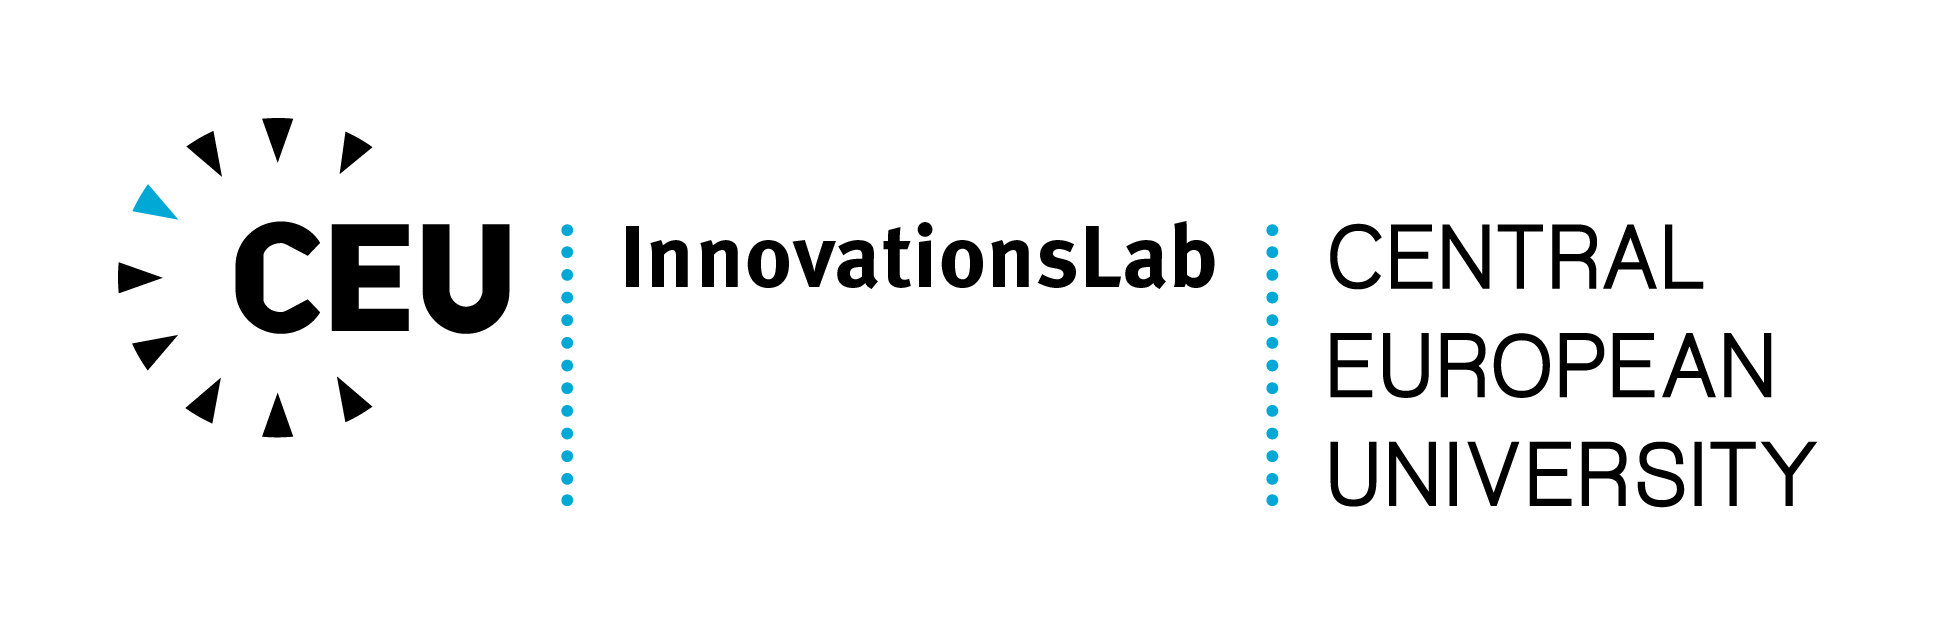 CEU Innovation Lab